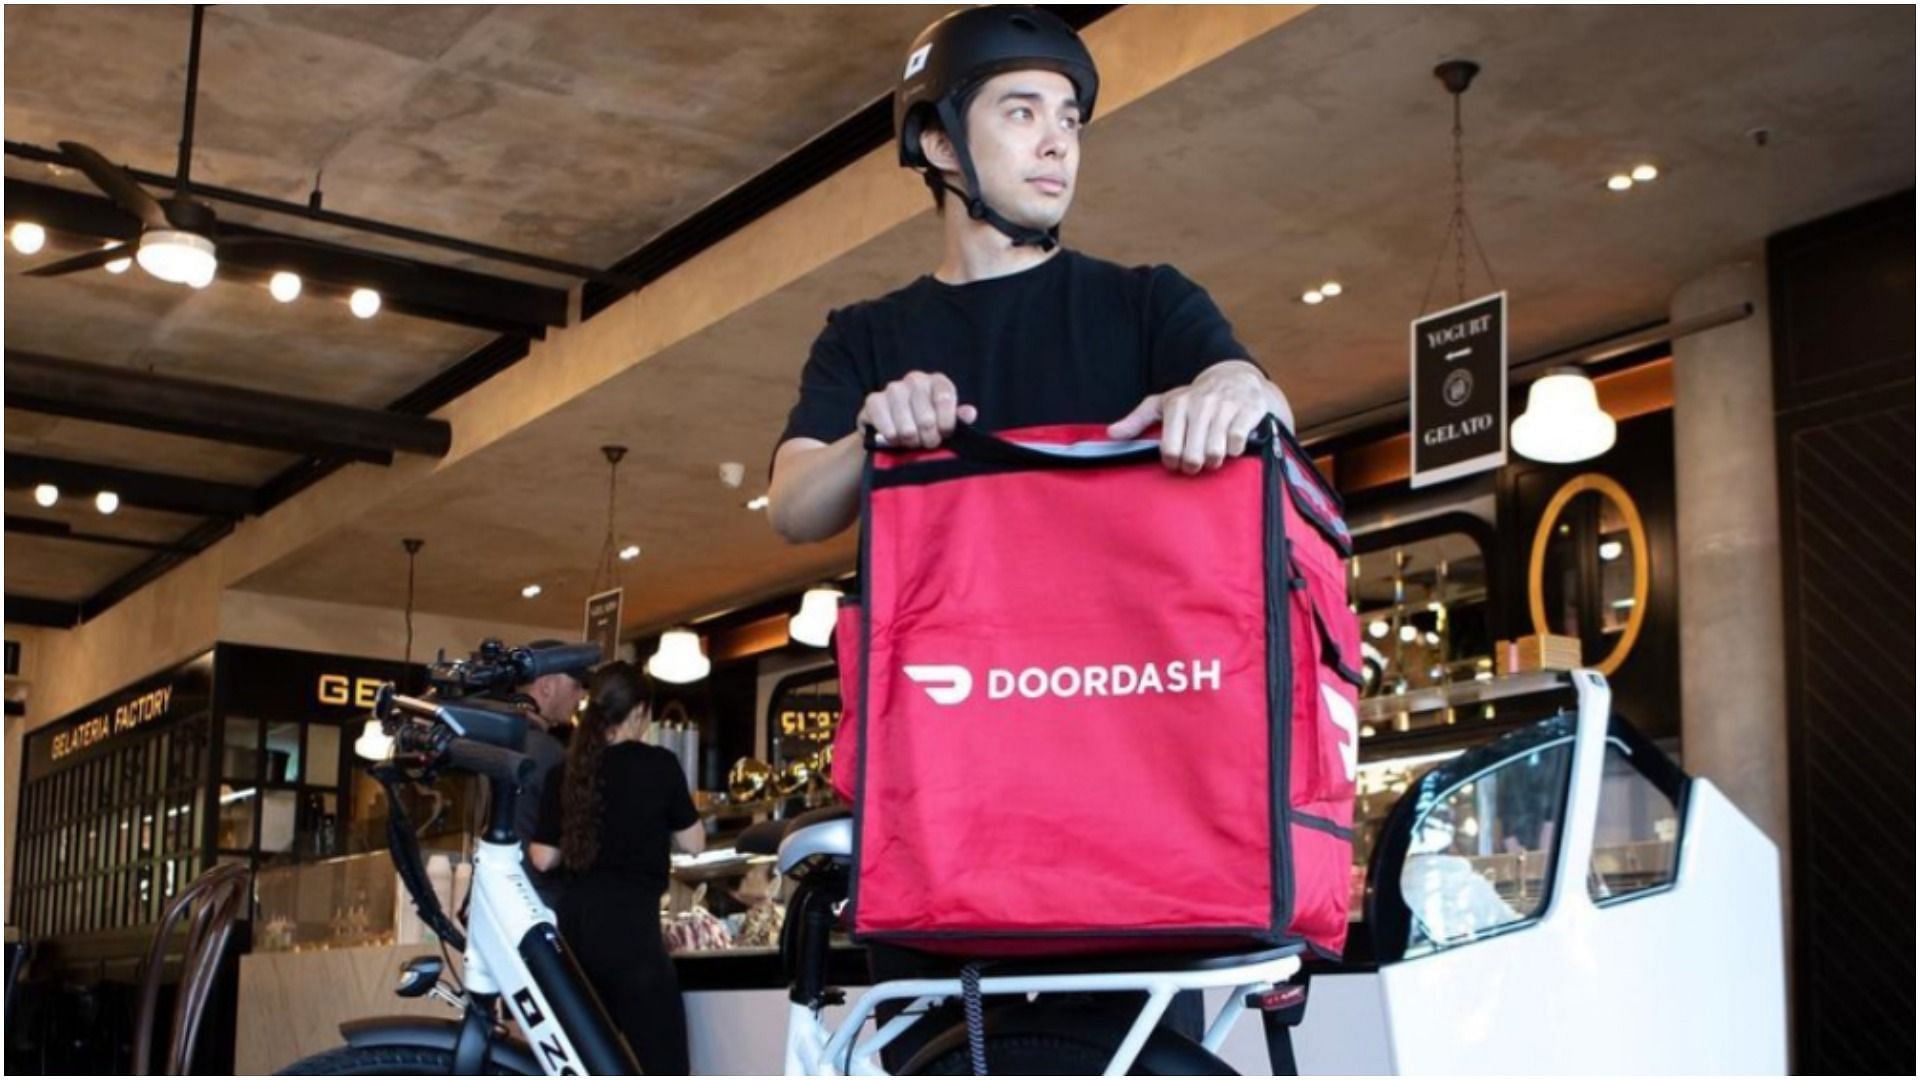 DoorDash opens door to its virtual food hall with limited seating in Brooklyn. (Image via DoorDash/Instagram)